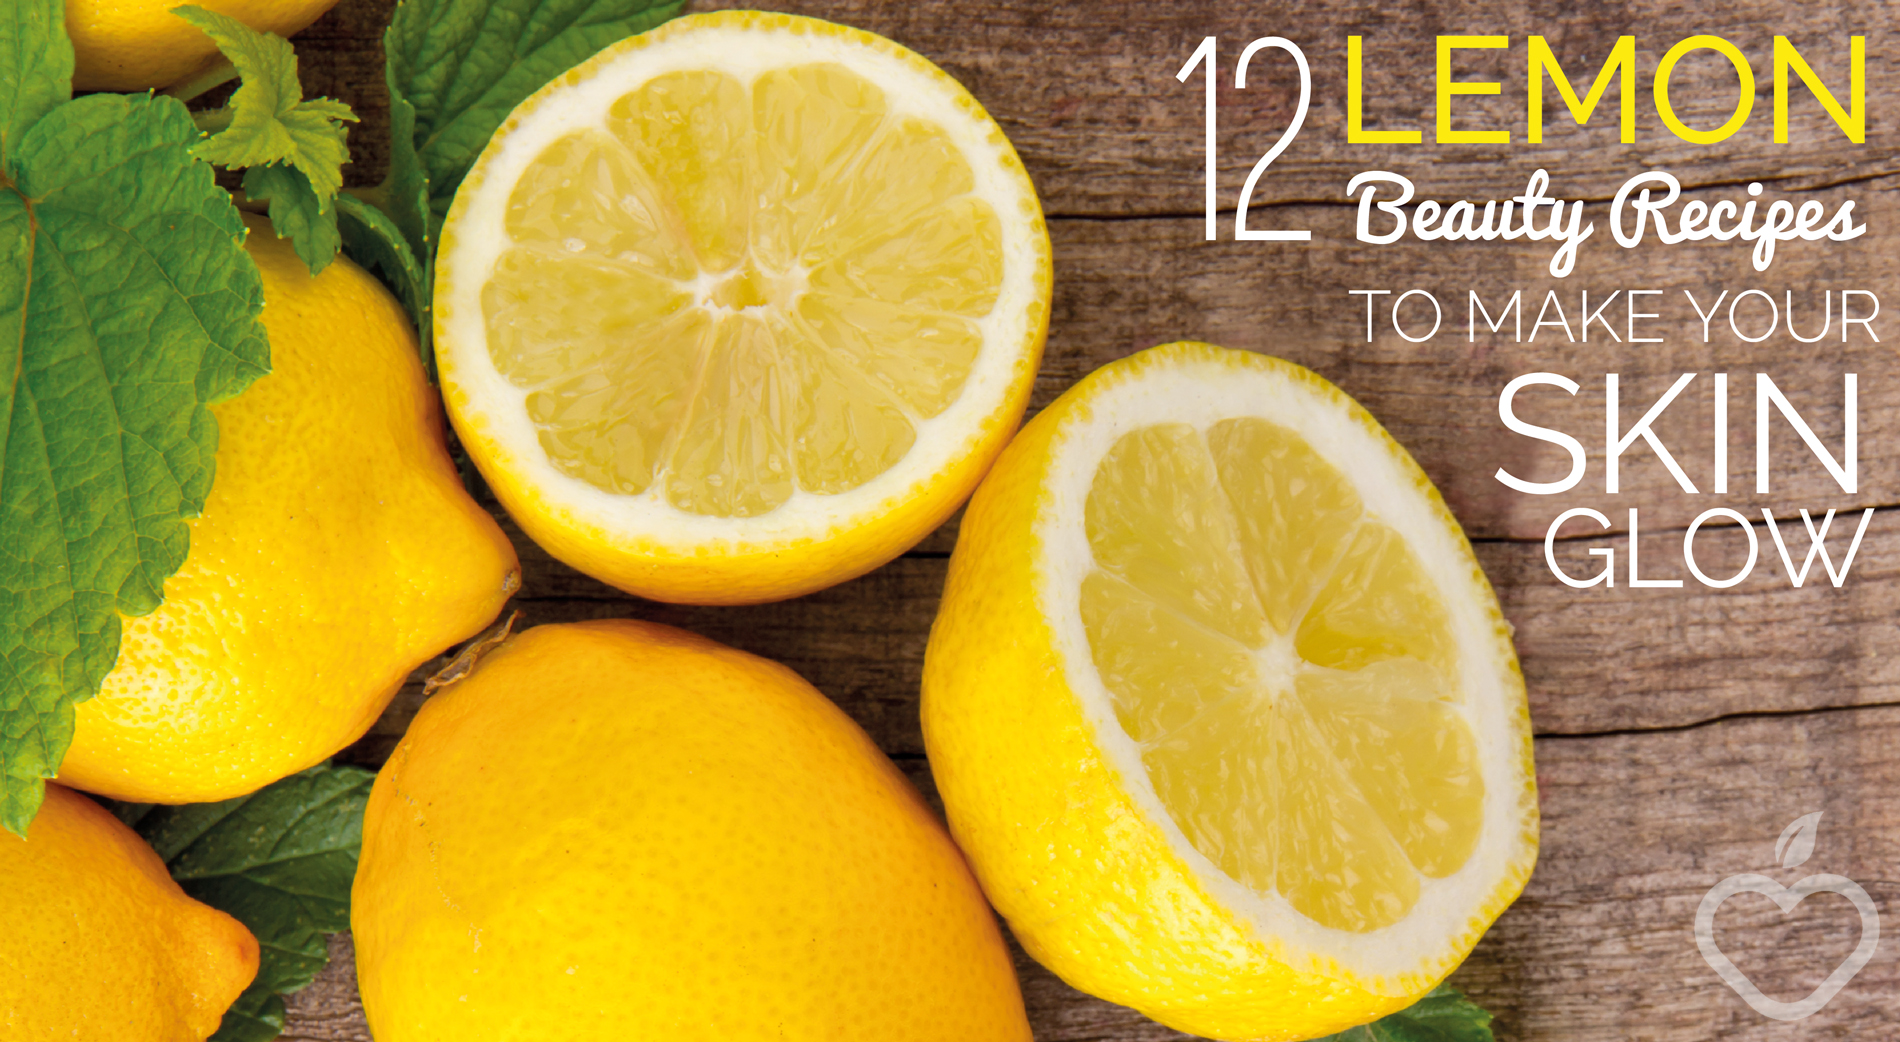 12 Lemon Beauty Recipes To Make Your Skin Glow